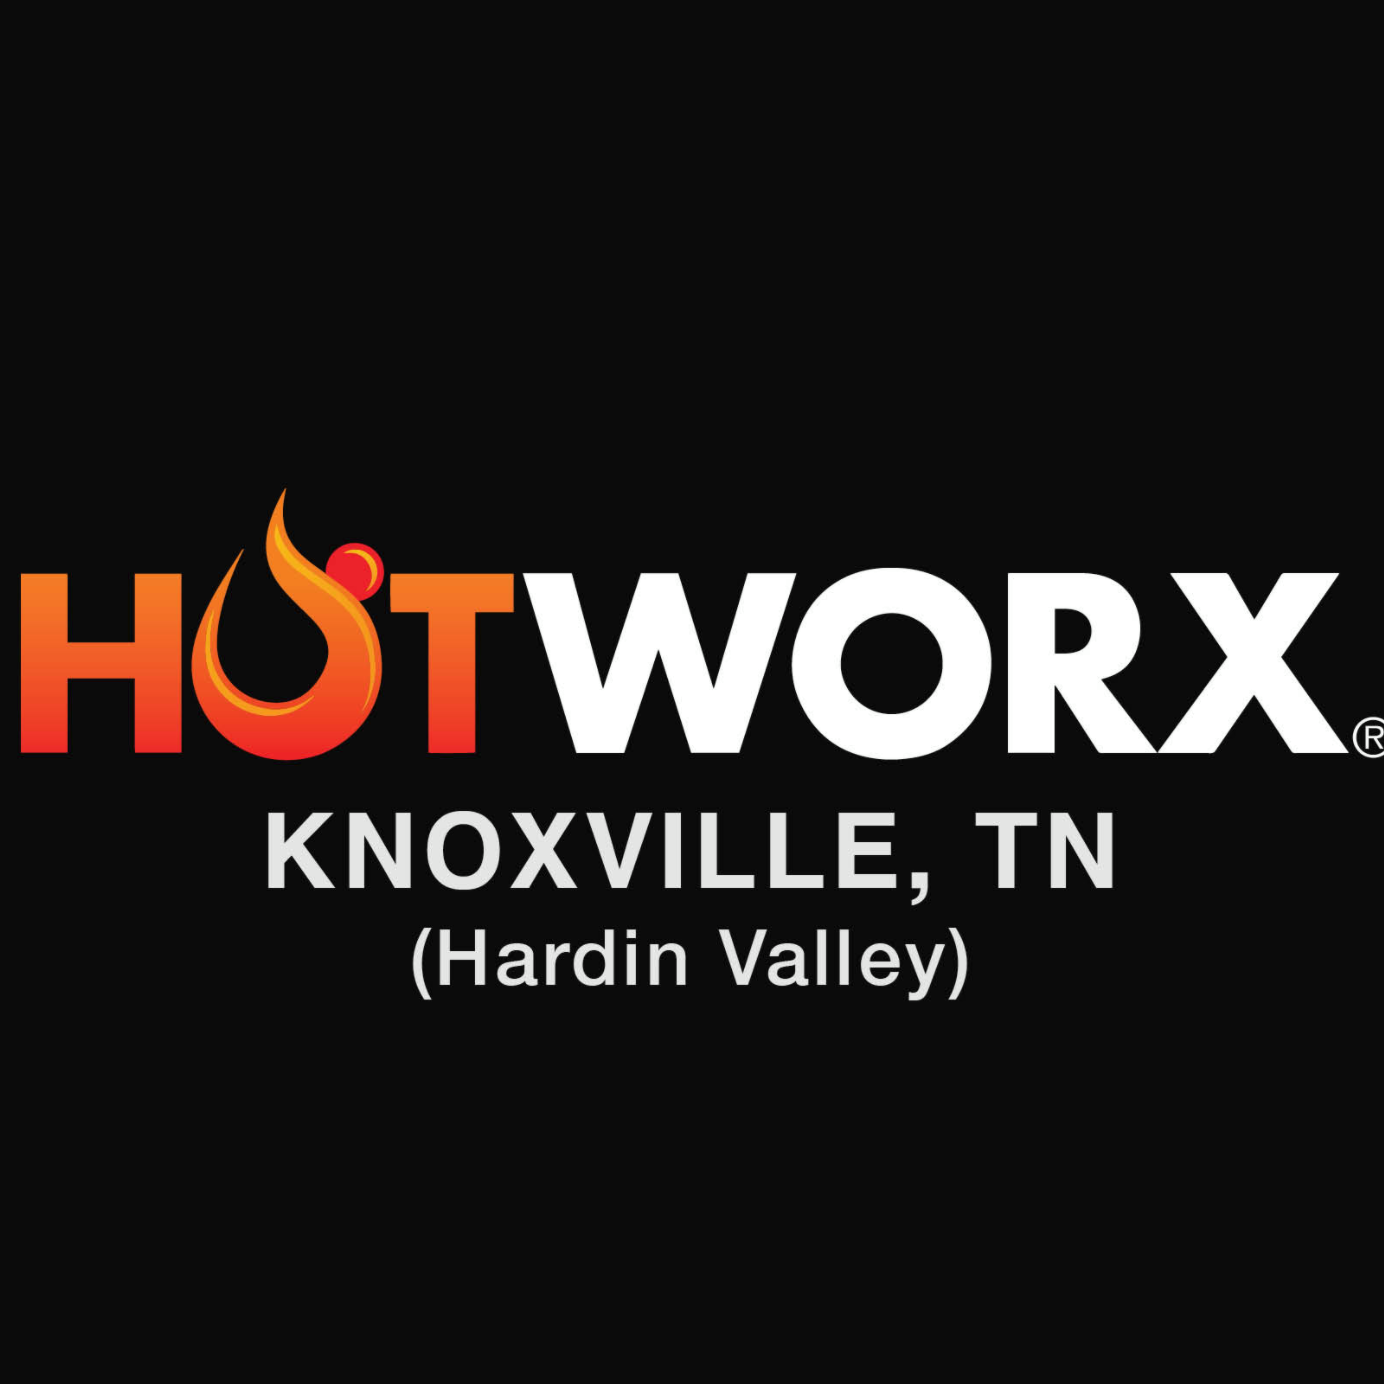 HOTWORX - Knoxville, TN (Hardin Valley)'s Logo